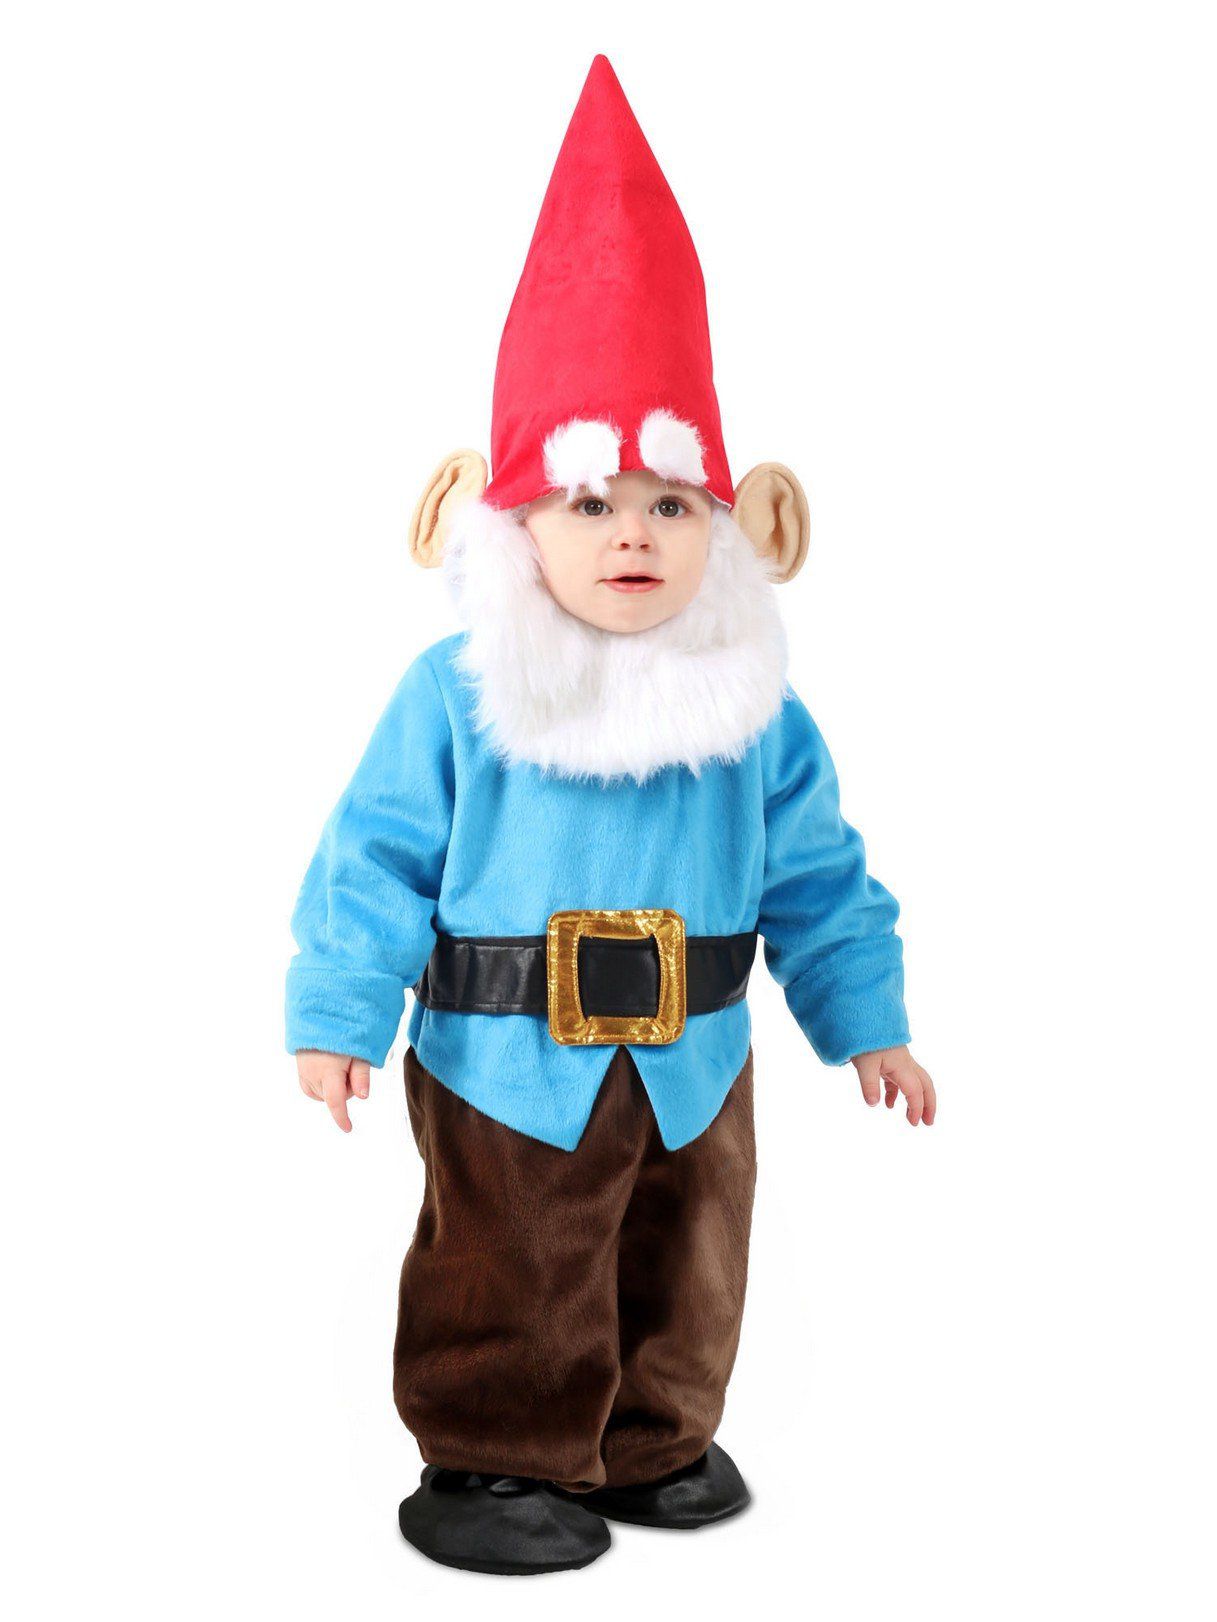 Toddler Littlest Garden Gnome Costume(18M/2T) - PartyBell.com